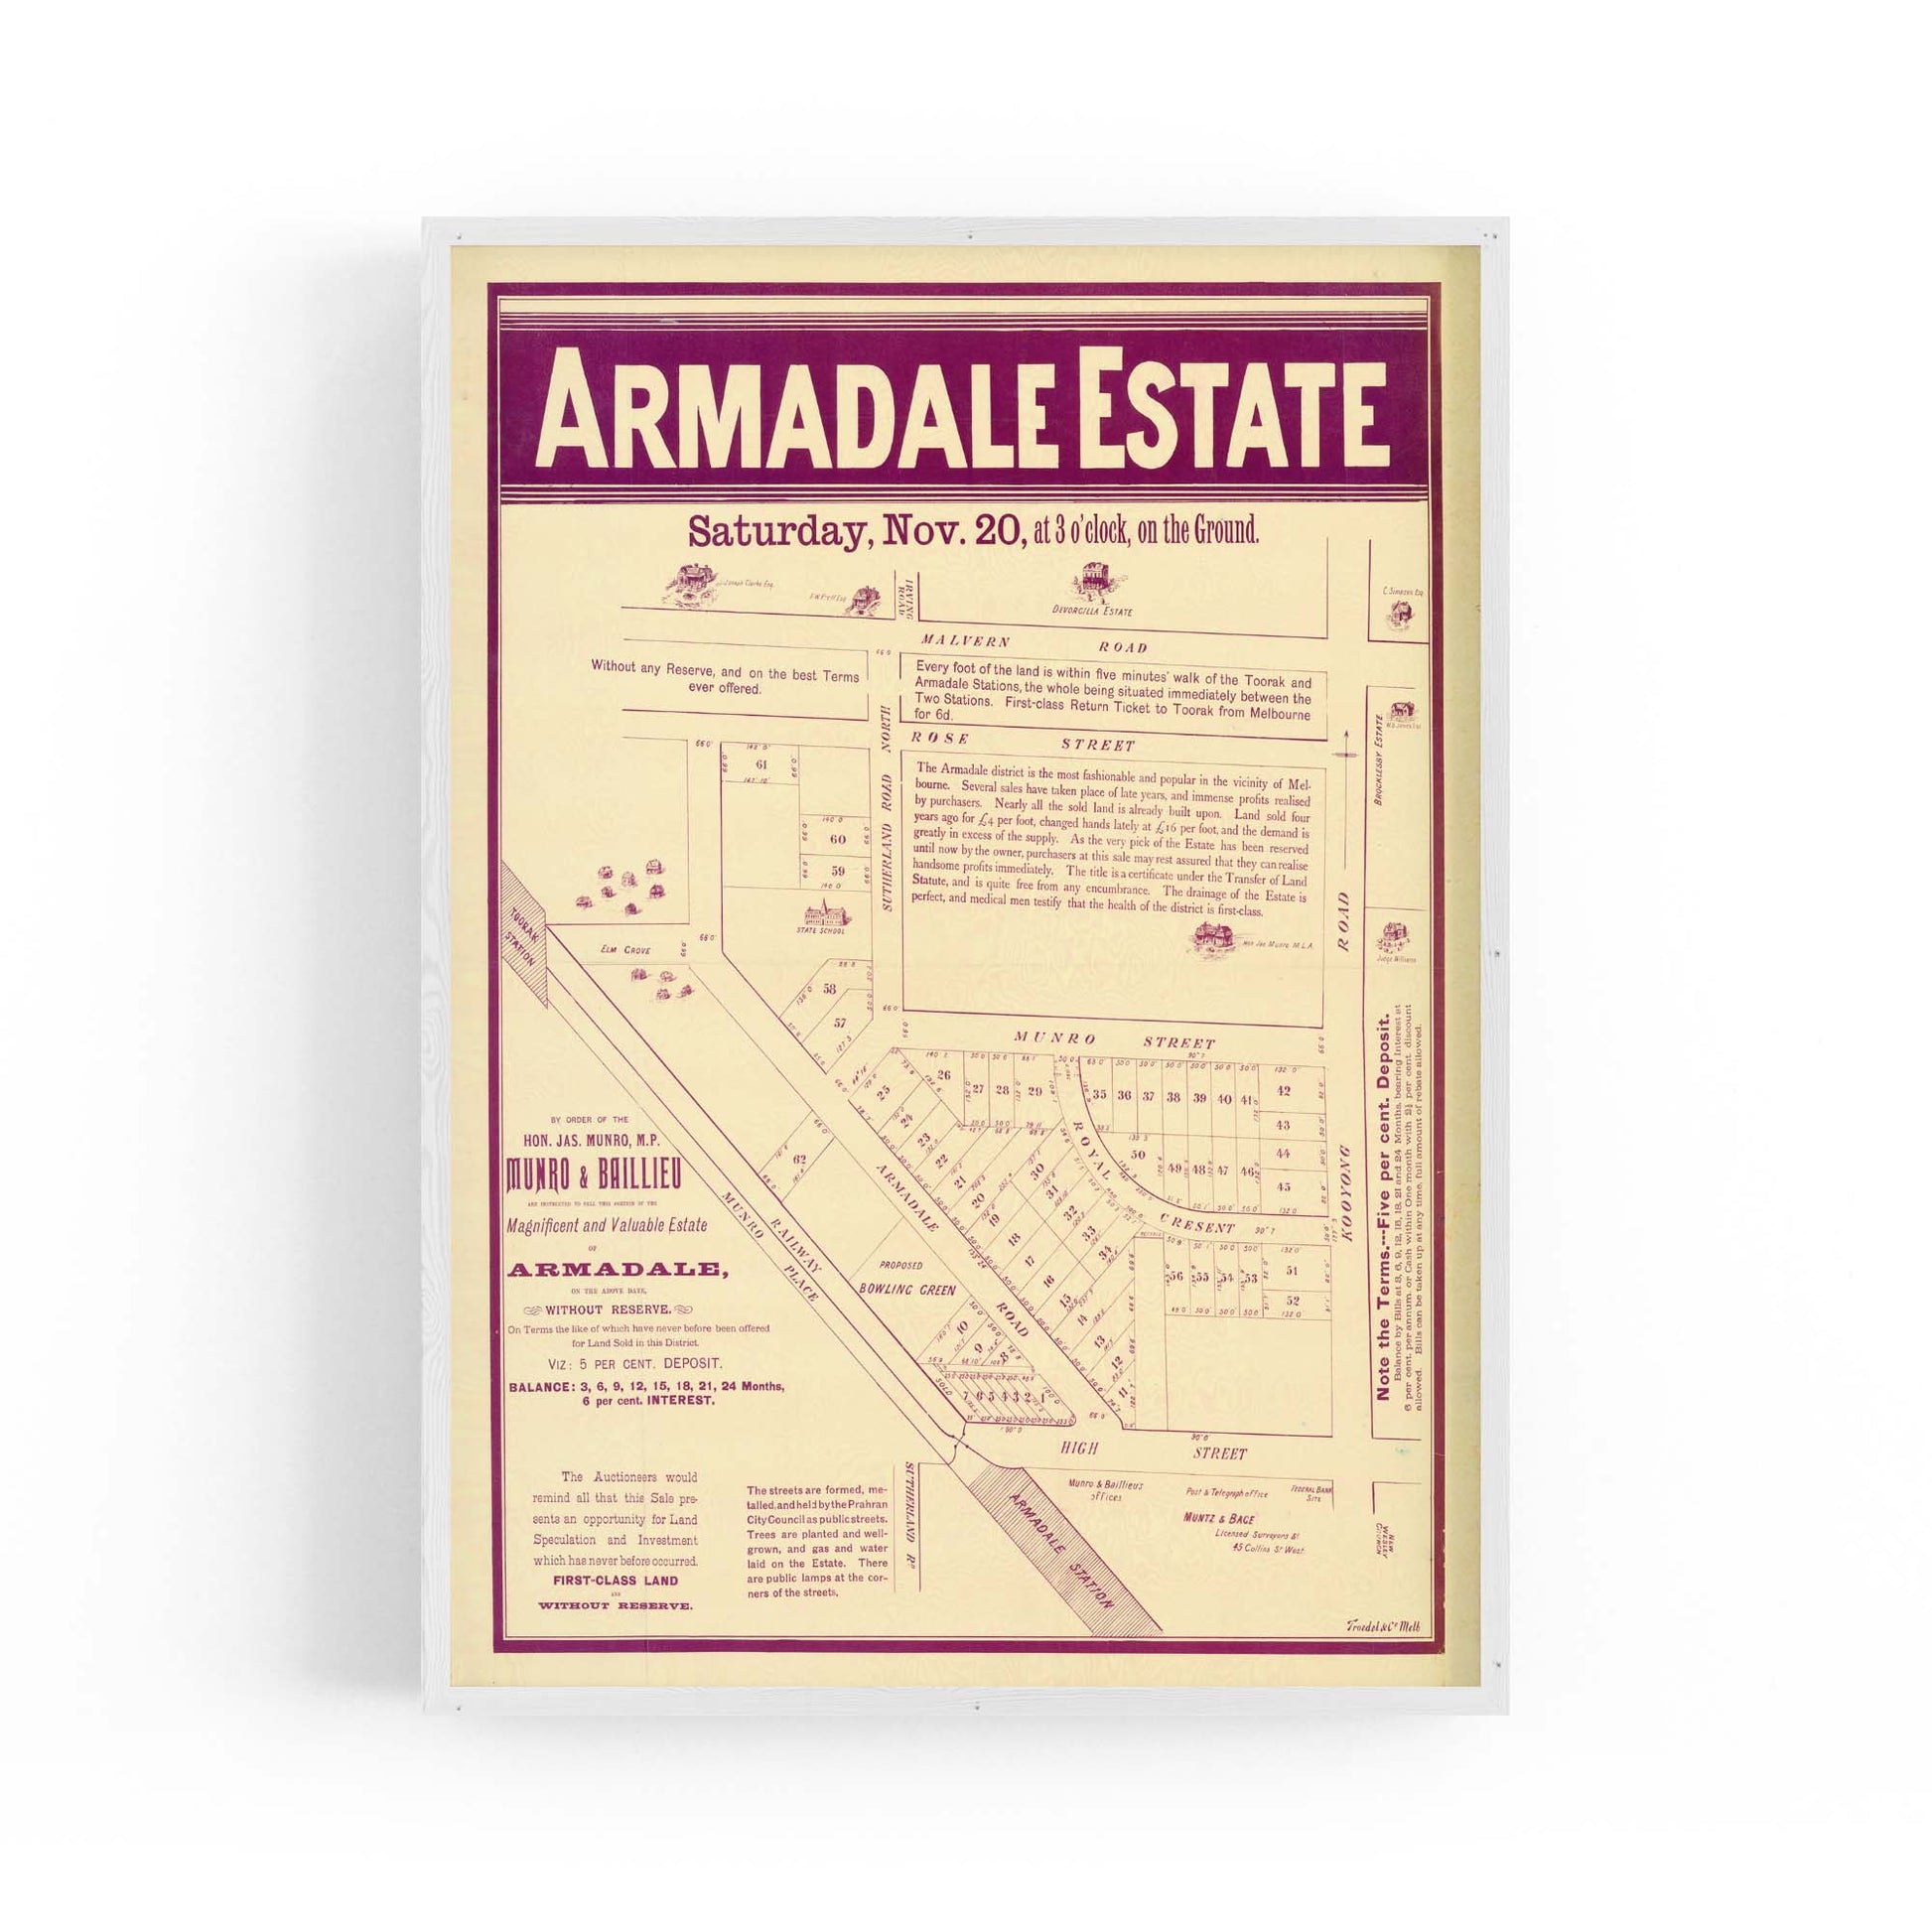 Armadale Melbourne Vintage Real Estate Advert Art #2 - The Affordable Art Company